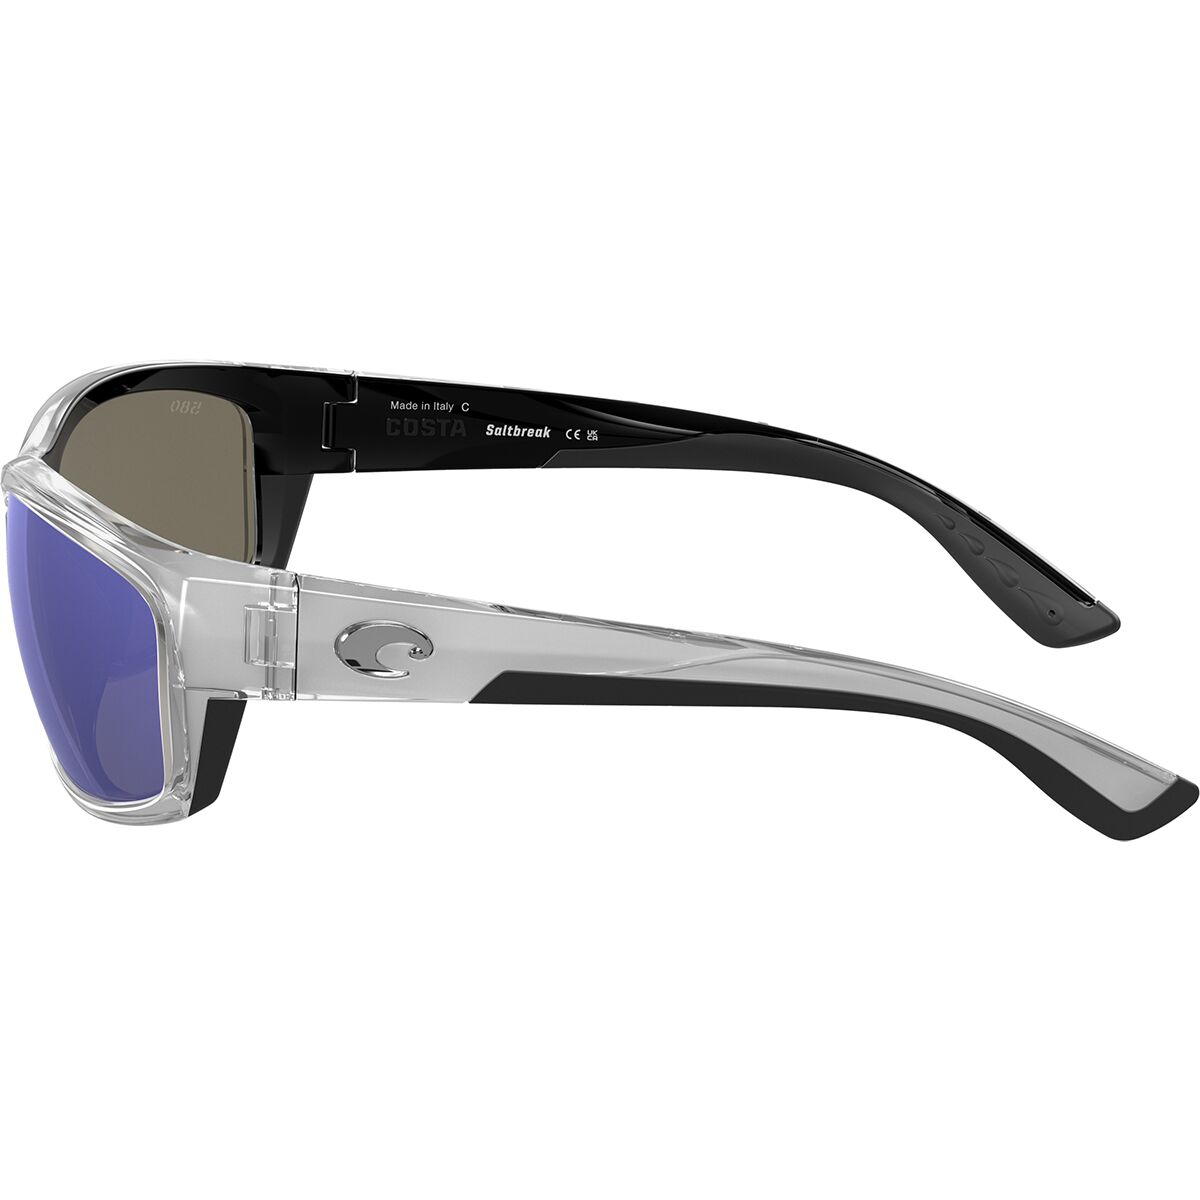 Costa Saltbreak 580G Polarized Sunglasses - Men